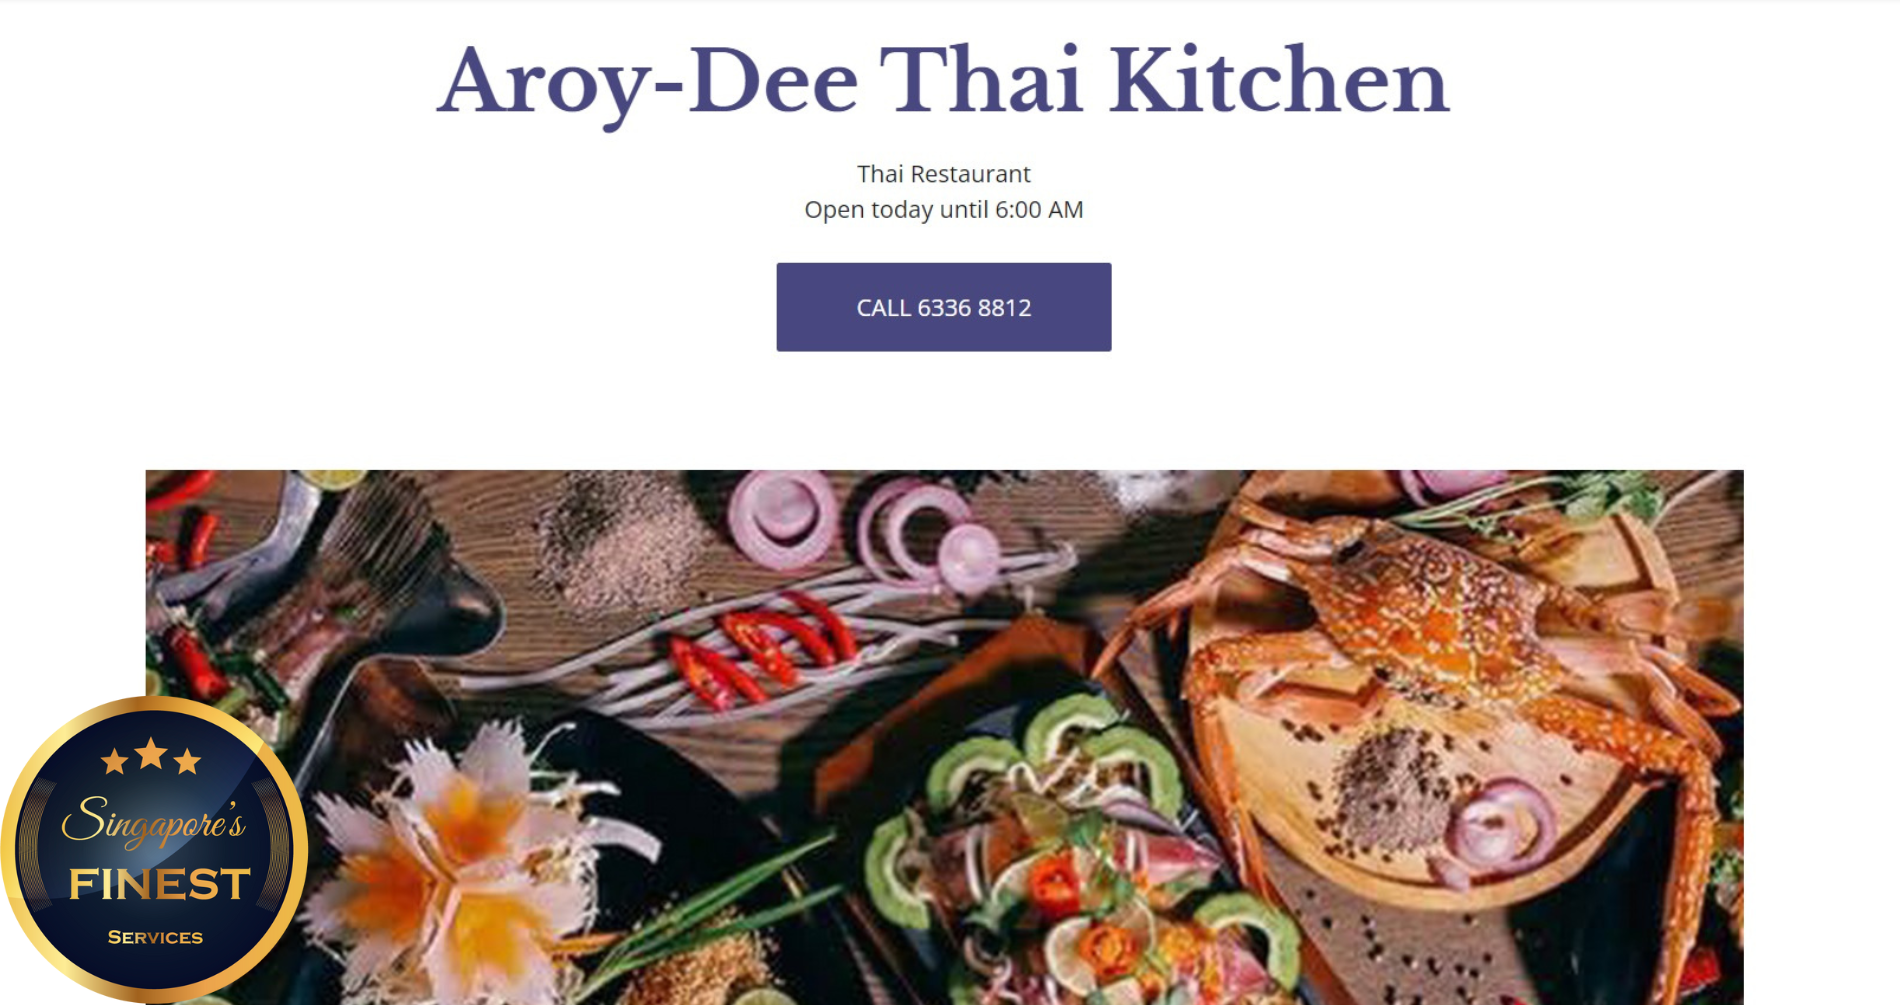 Aroy-Dee Thai Kitchen - Thai Food Restaurant Singapore